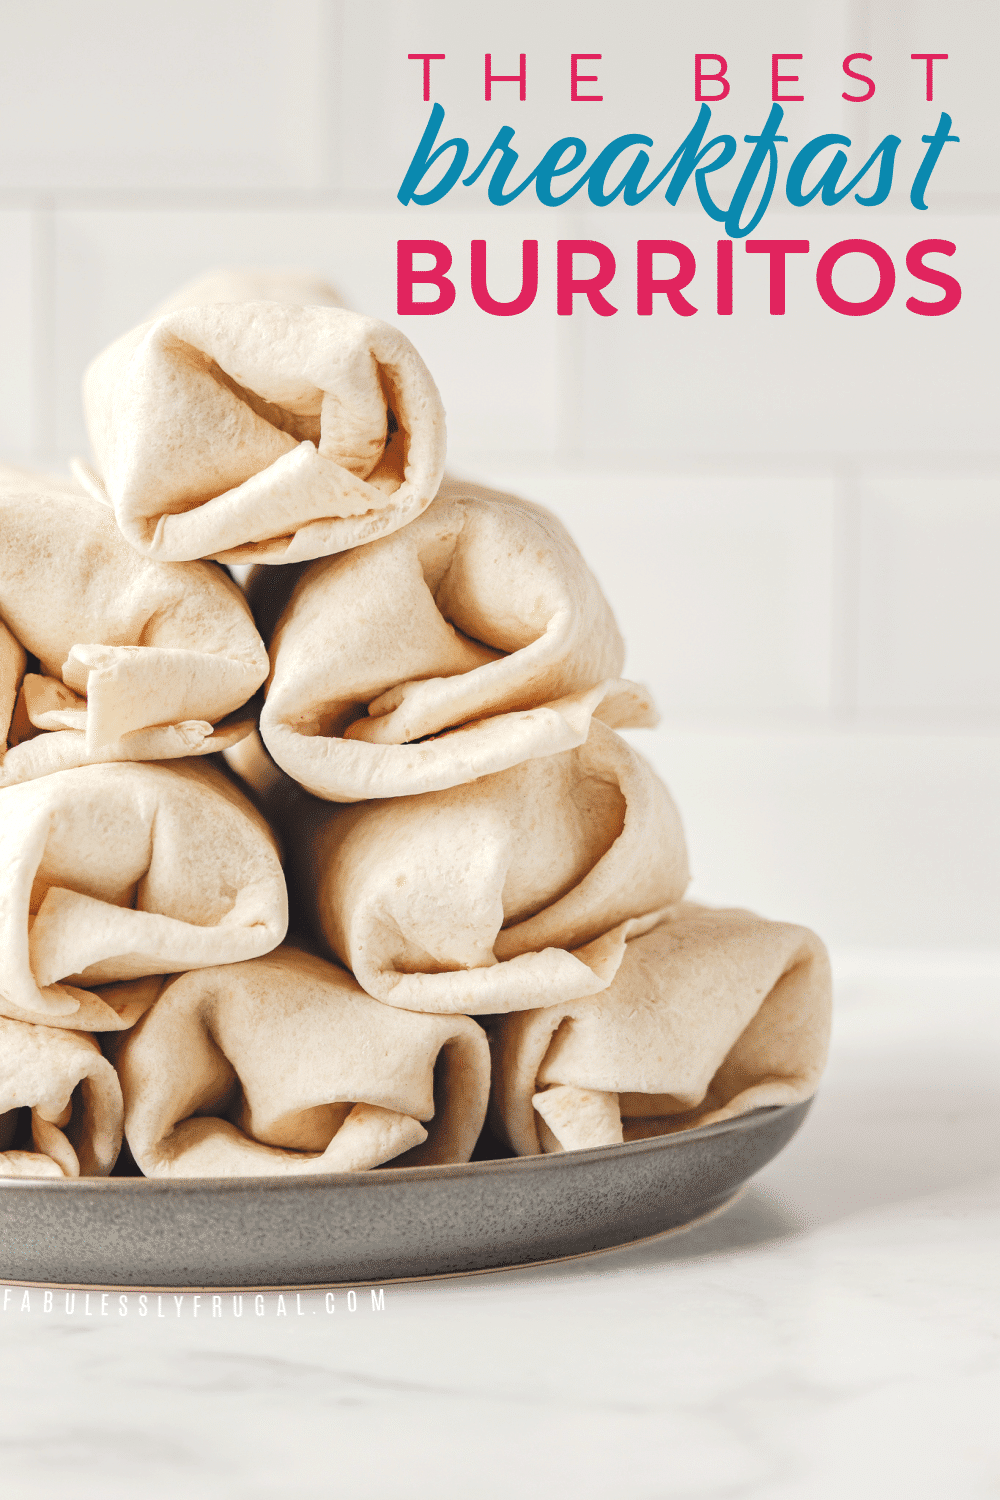 Rolled make-ahead burritos